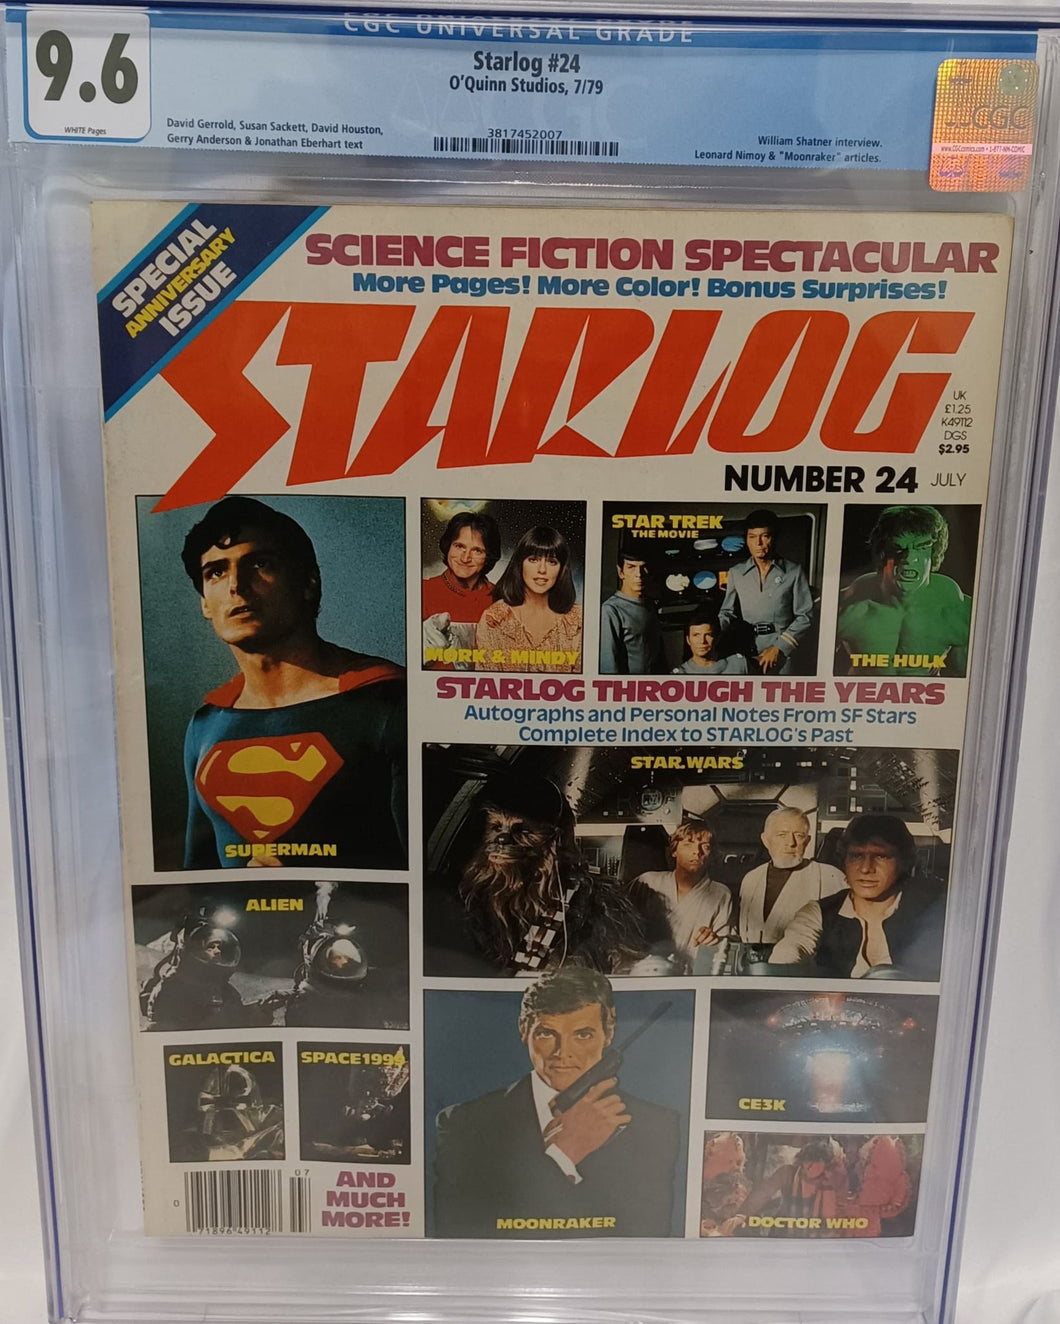 Starlog Magazine #24 July 1979 CGC 9.6 - Star Wars, Superman, Hulk, Star Trek cover